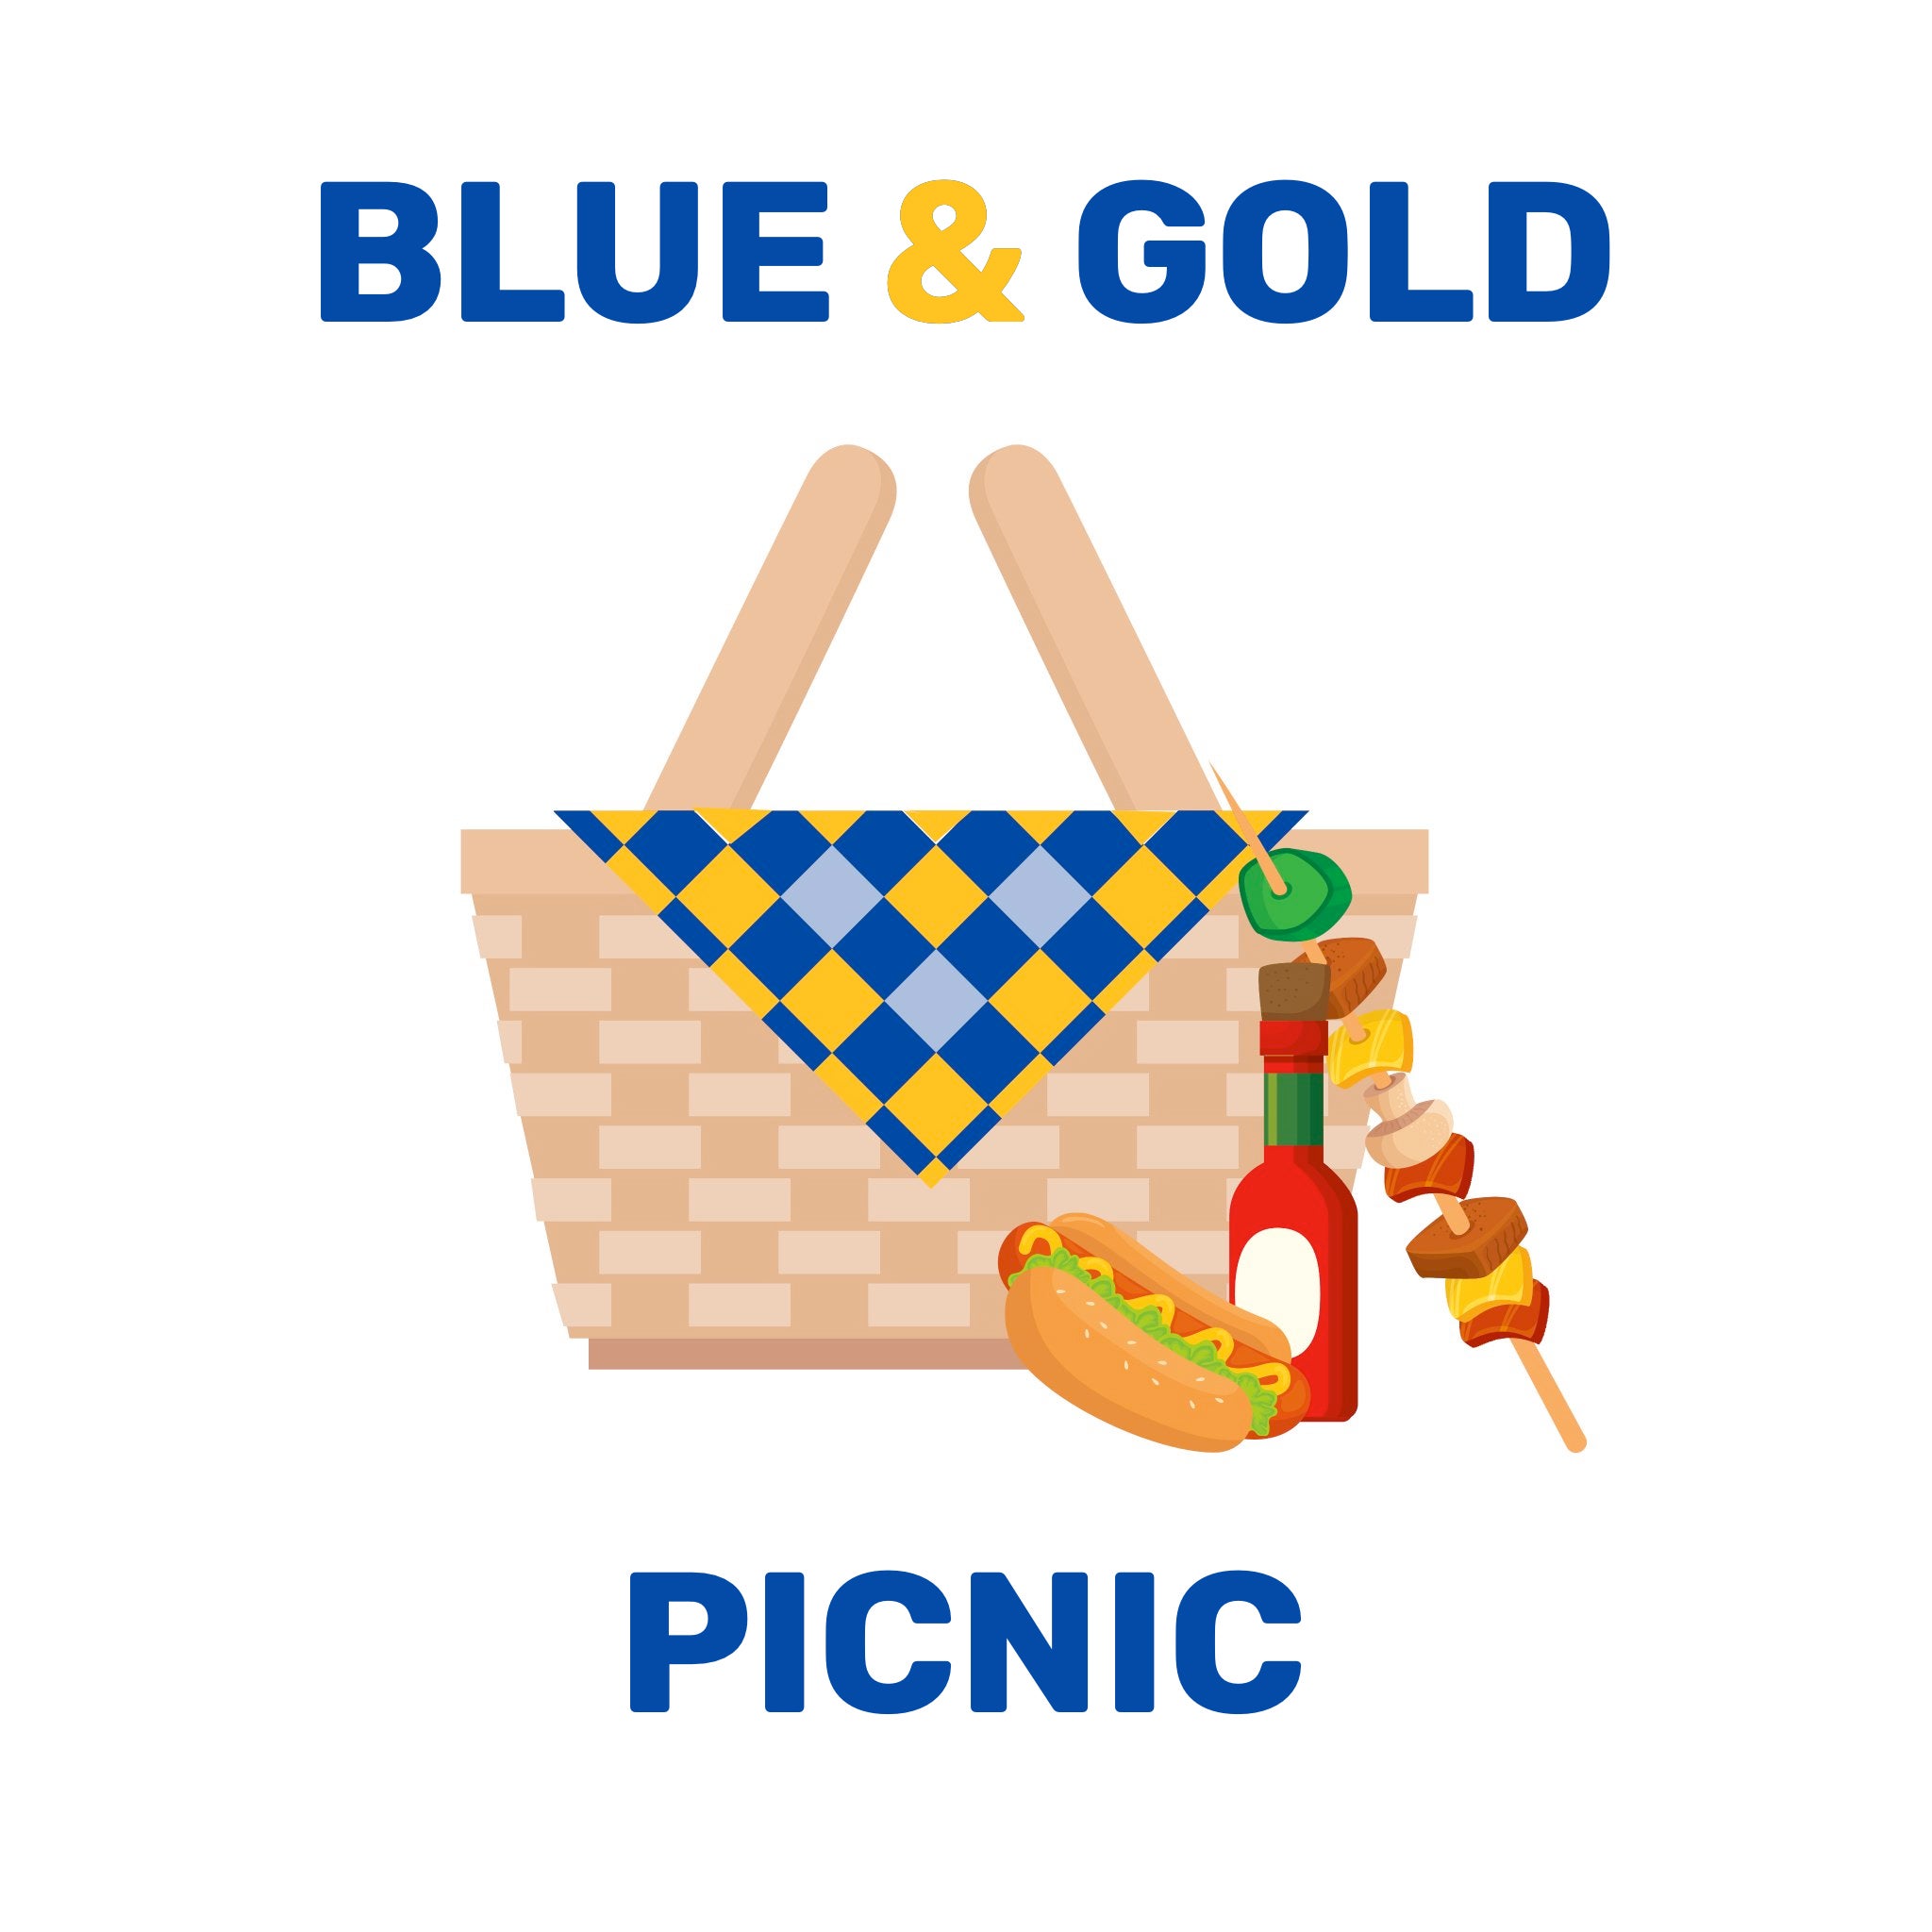 Blue & Gold Picnic - Blue & Gold Celebration Logo